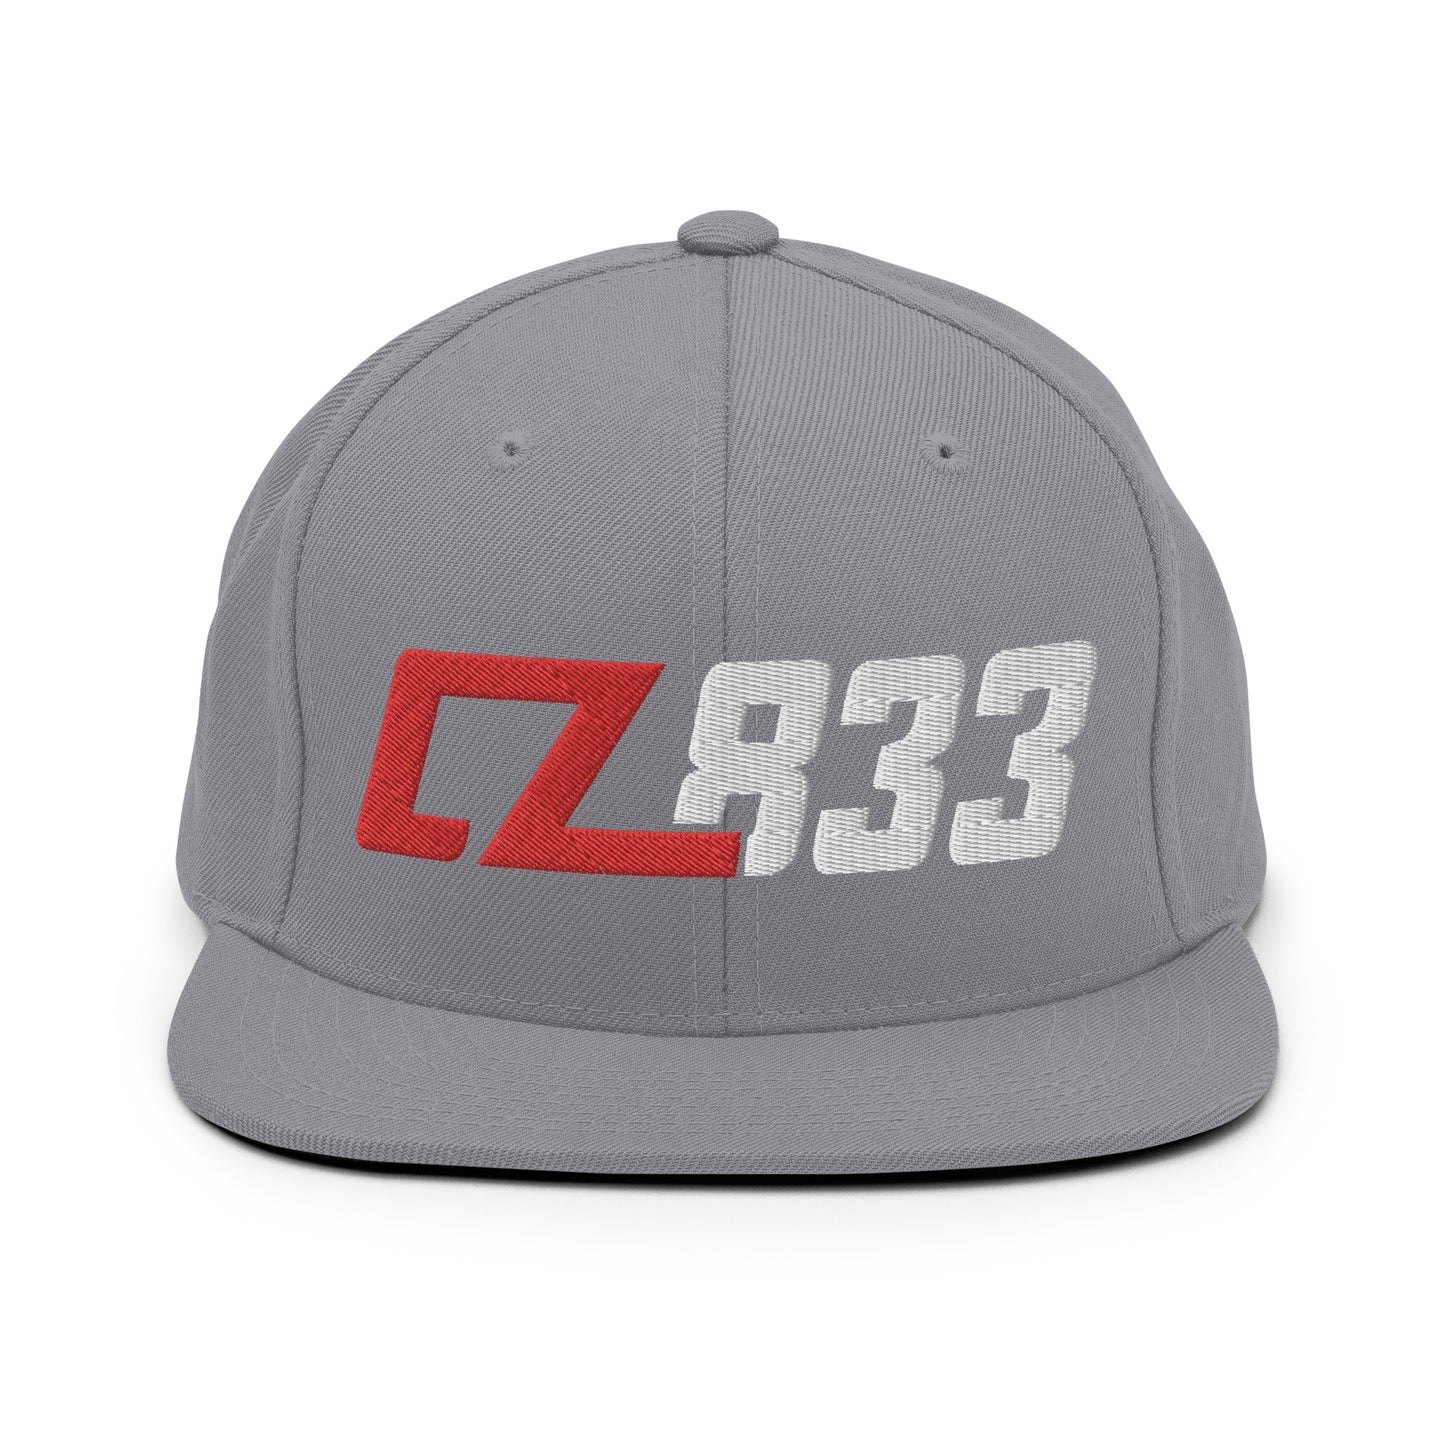 CZ833 Snapback Hat